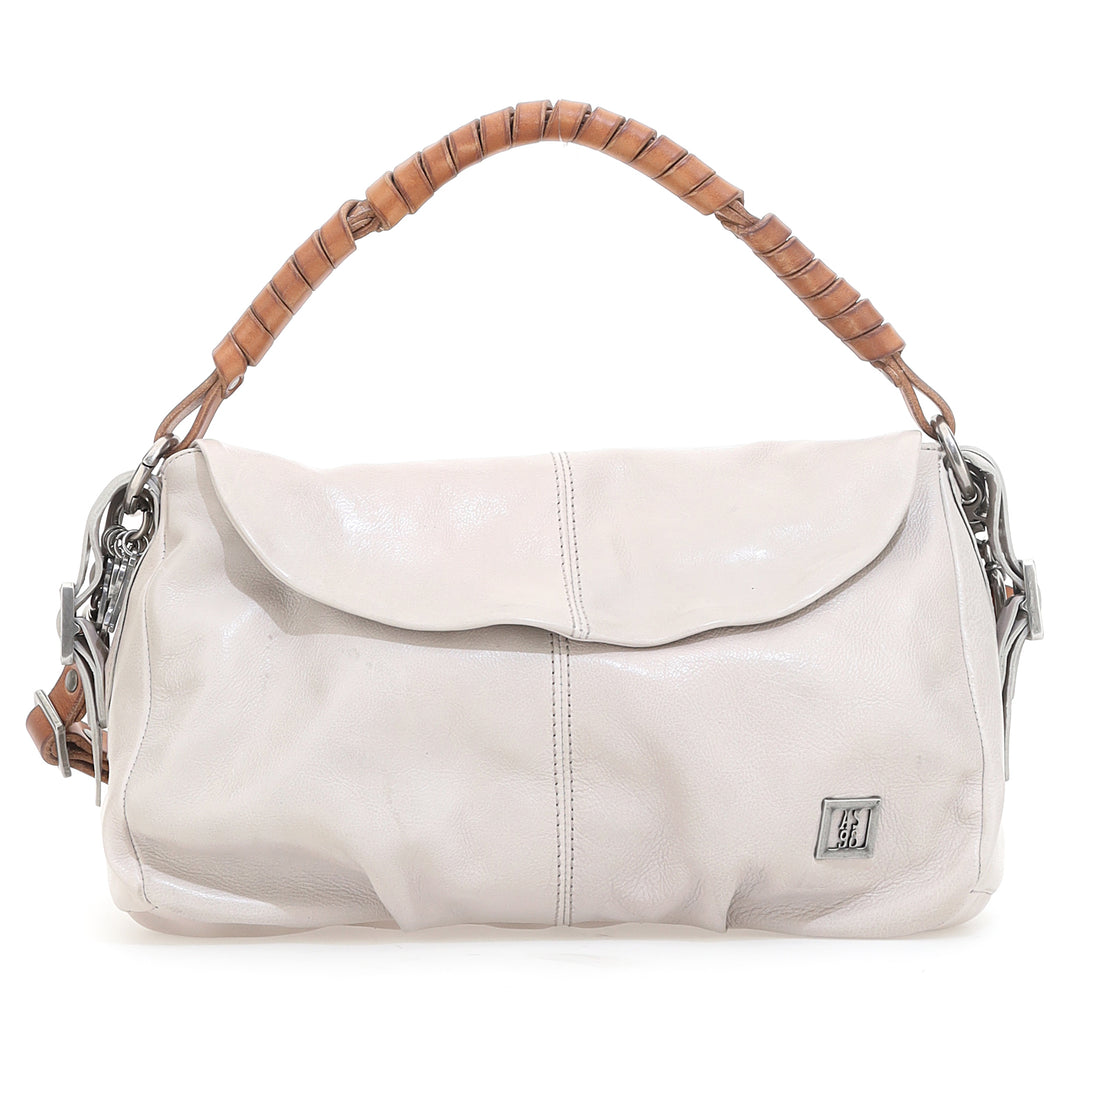 Mindy - A.S. 98 - Handbags